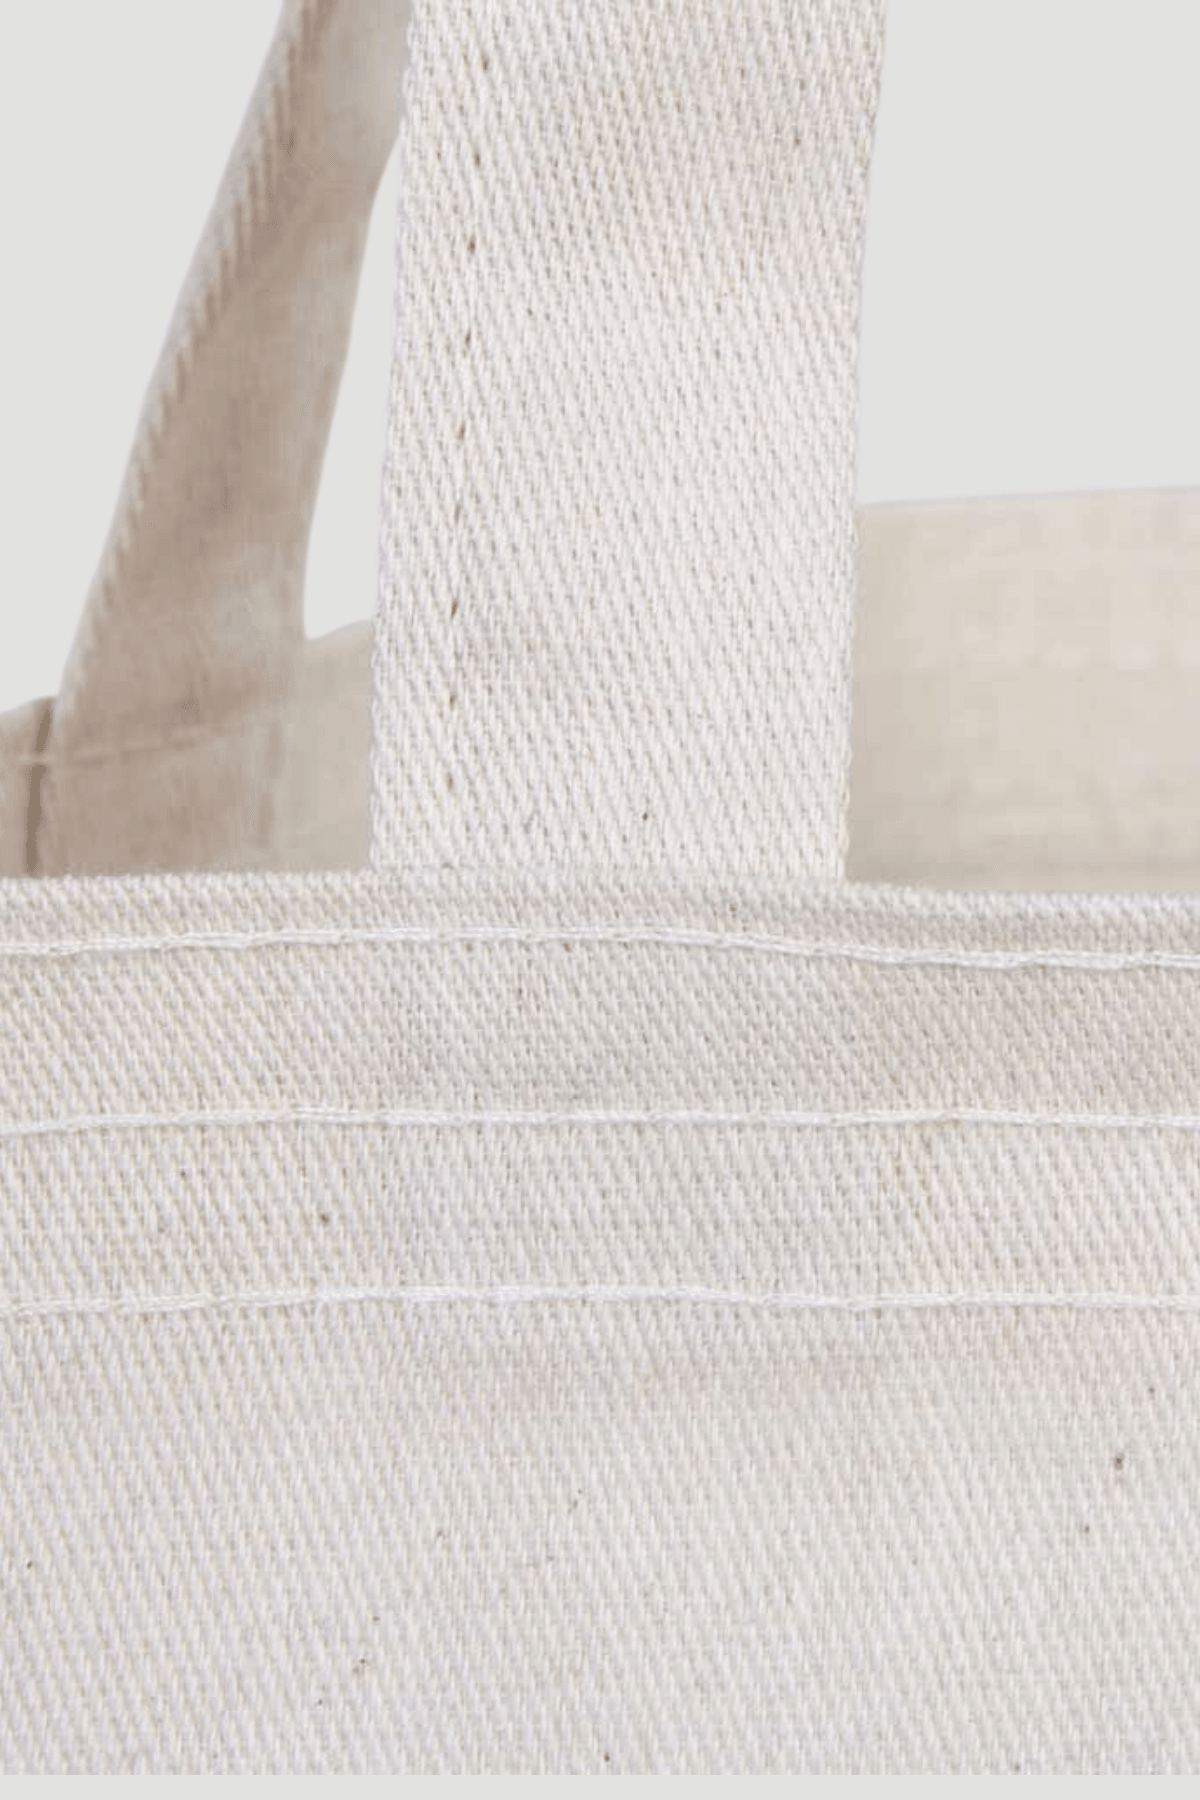 Sahara Printed Cloth Bag